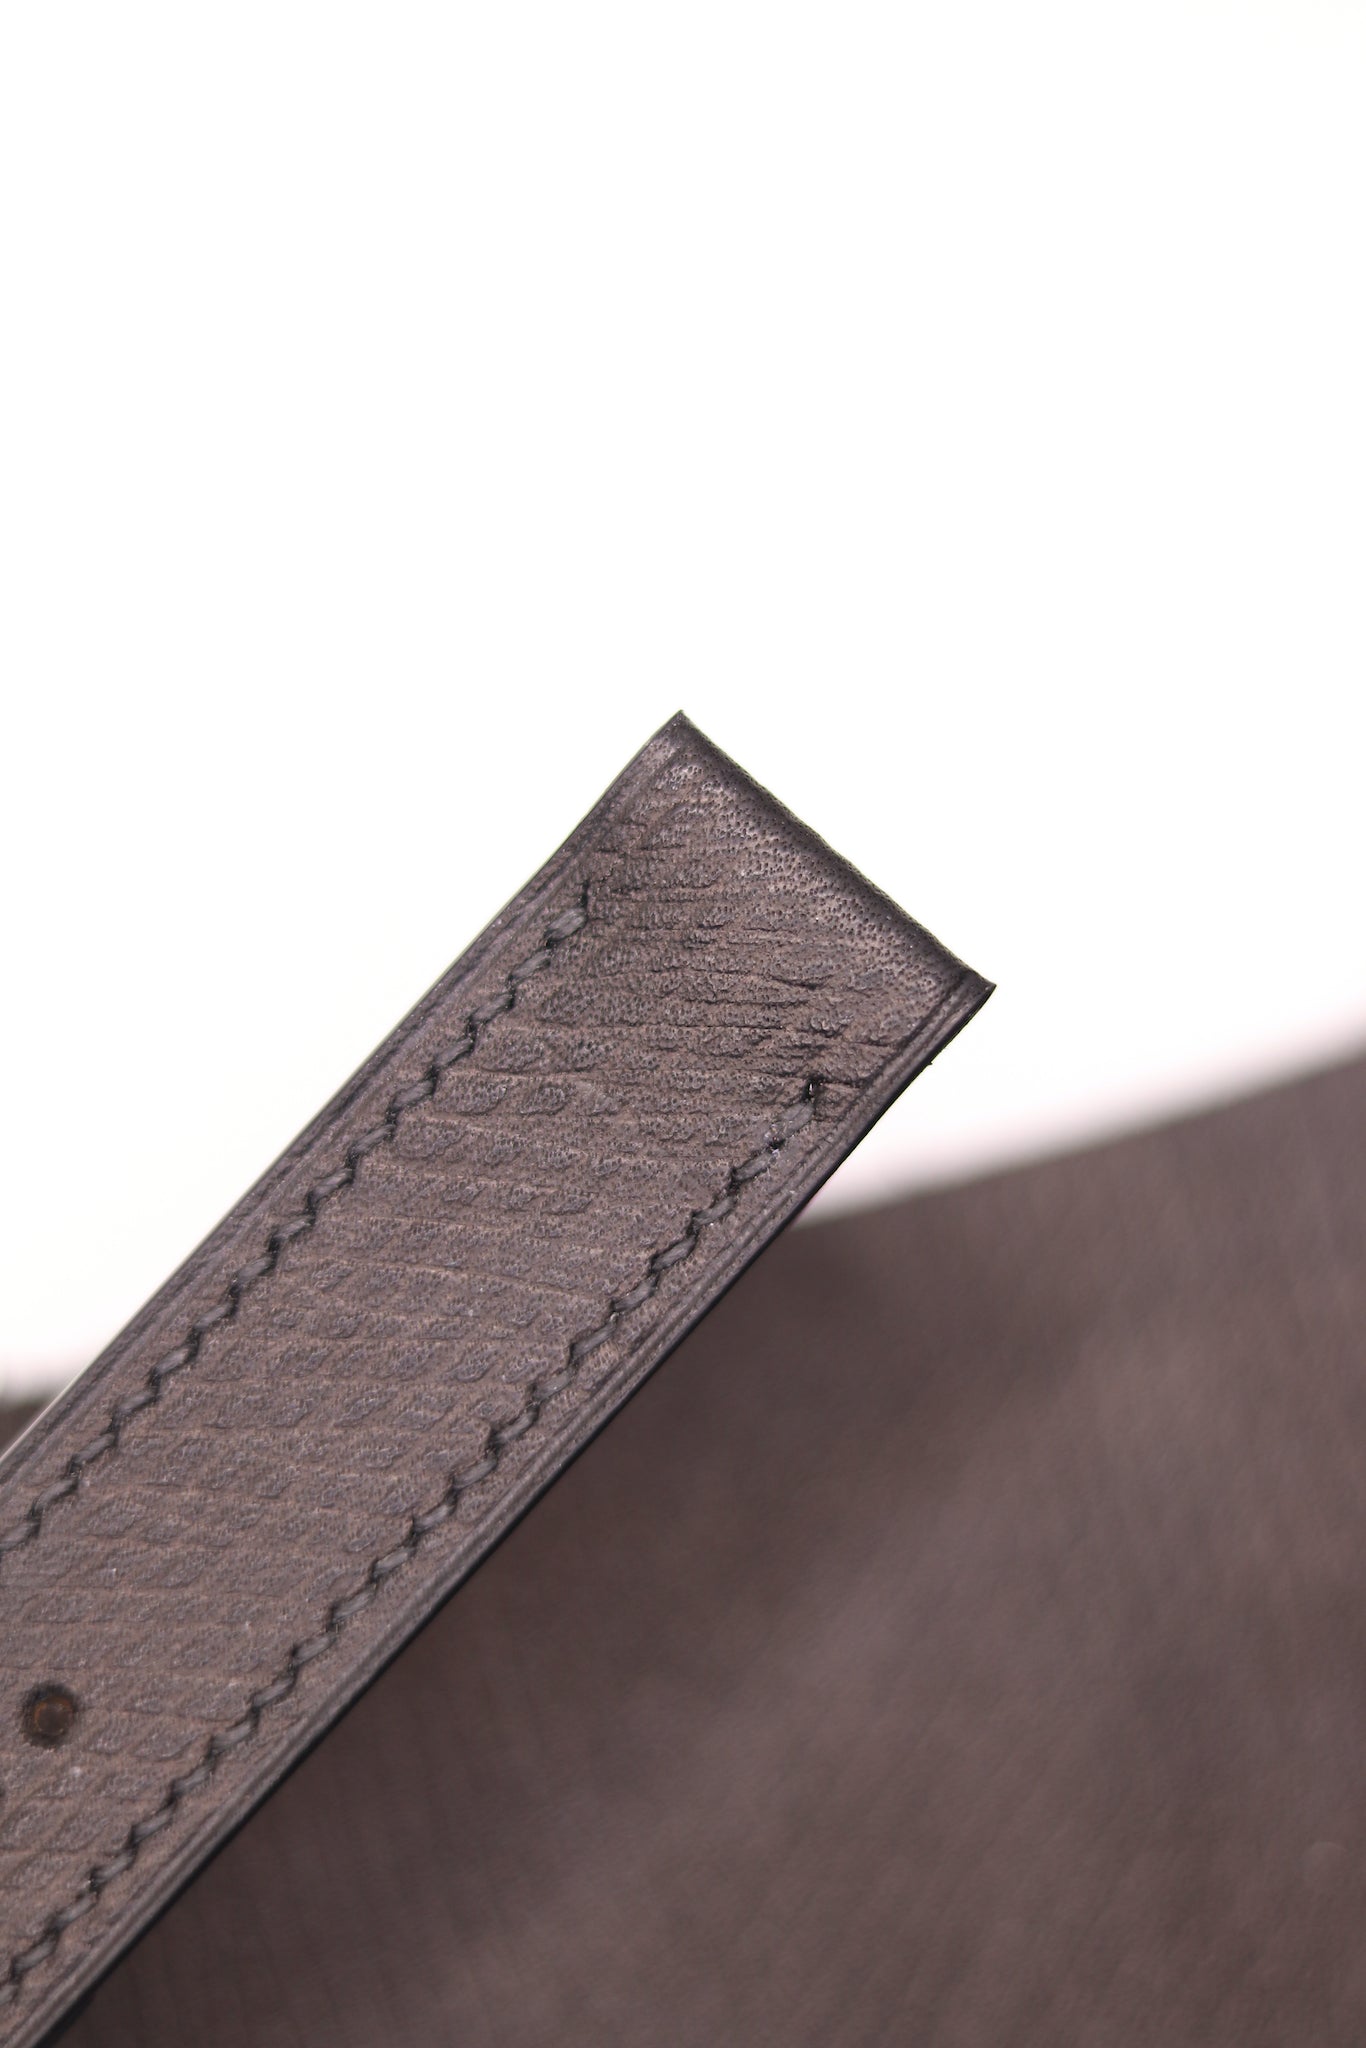 Stitching Detail of JFJ Baker's Black Russian Calf Watch Strap